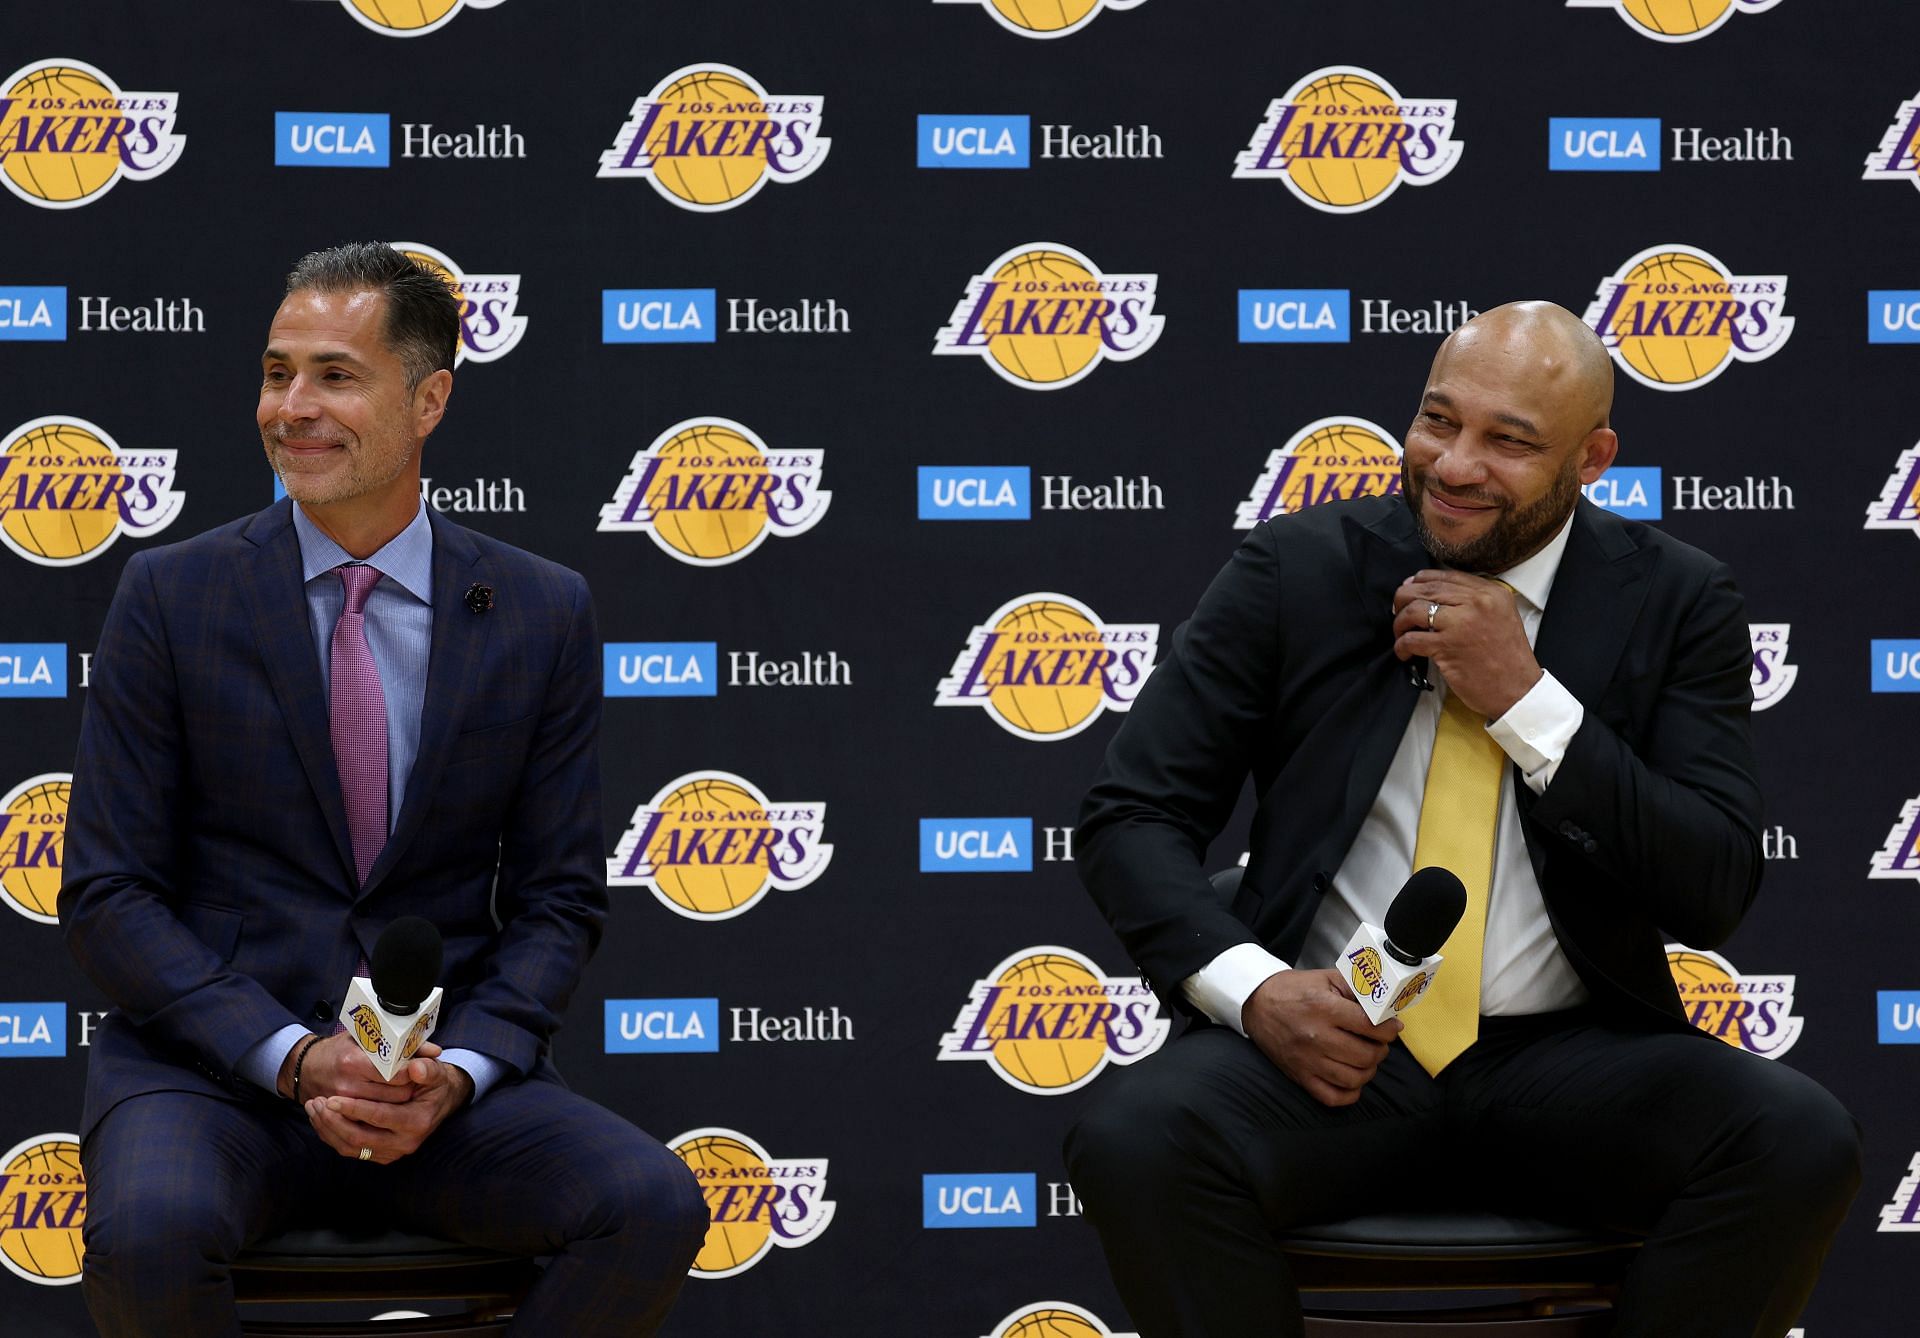 LA Lakers GM Rob Pelinka introducing Darvin Ham as the new head coach of the LA Lakers.